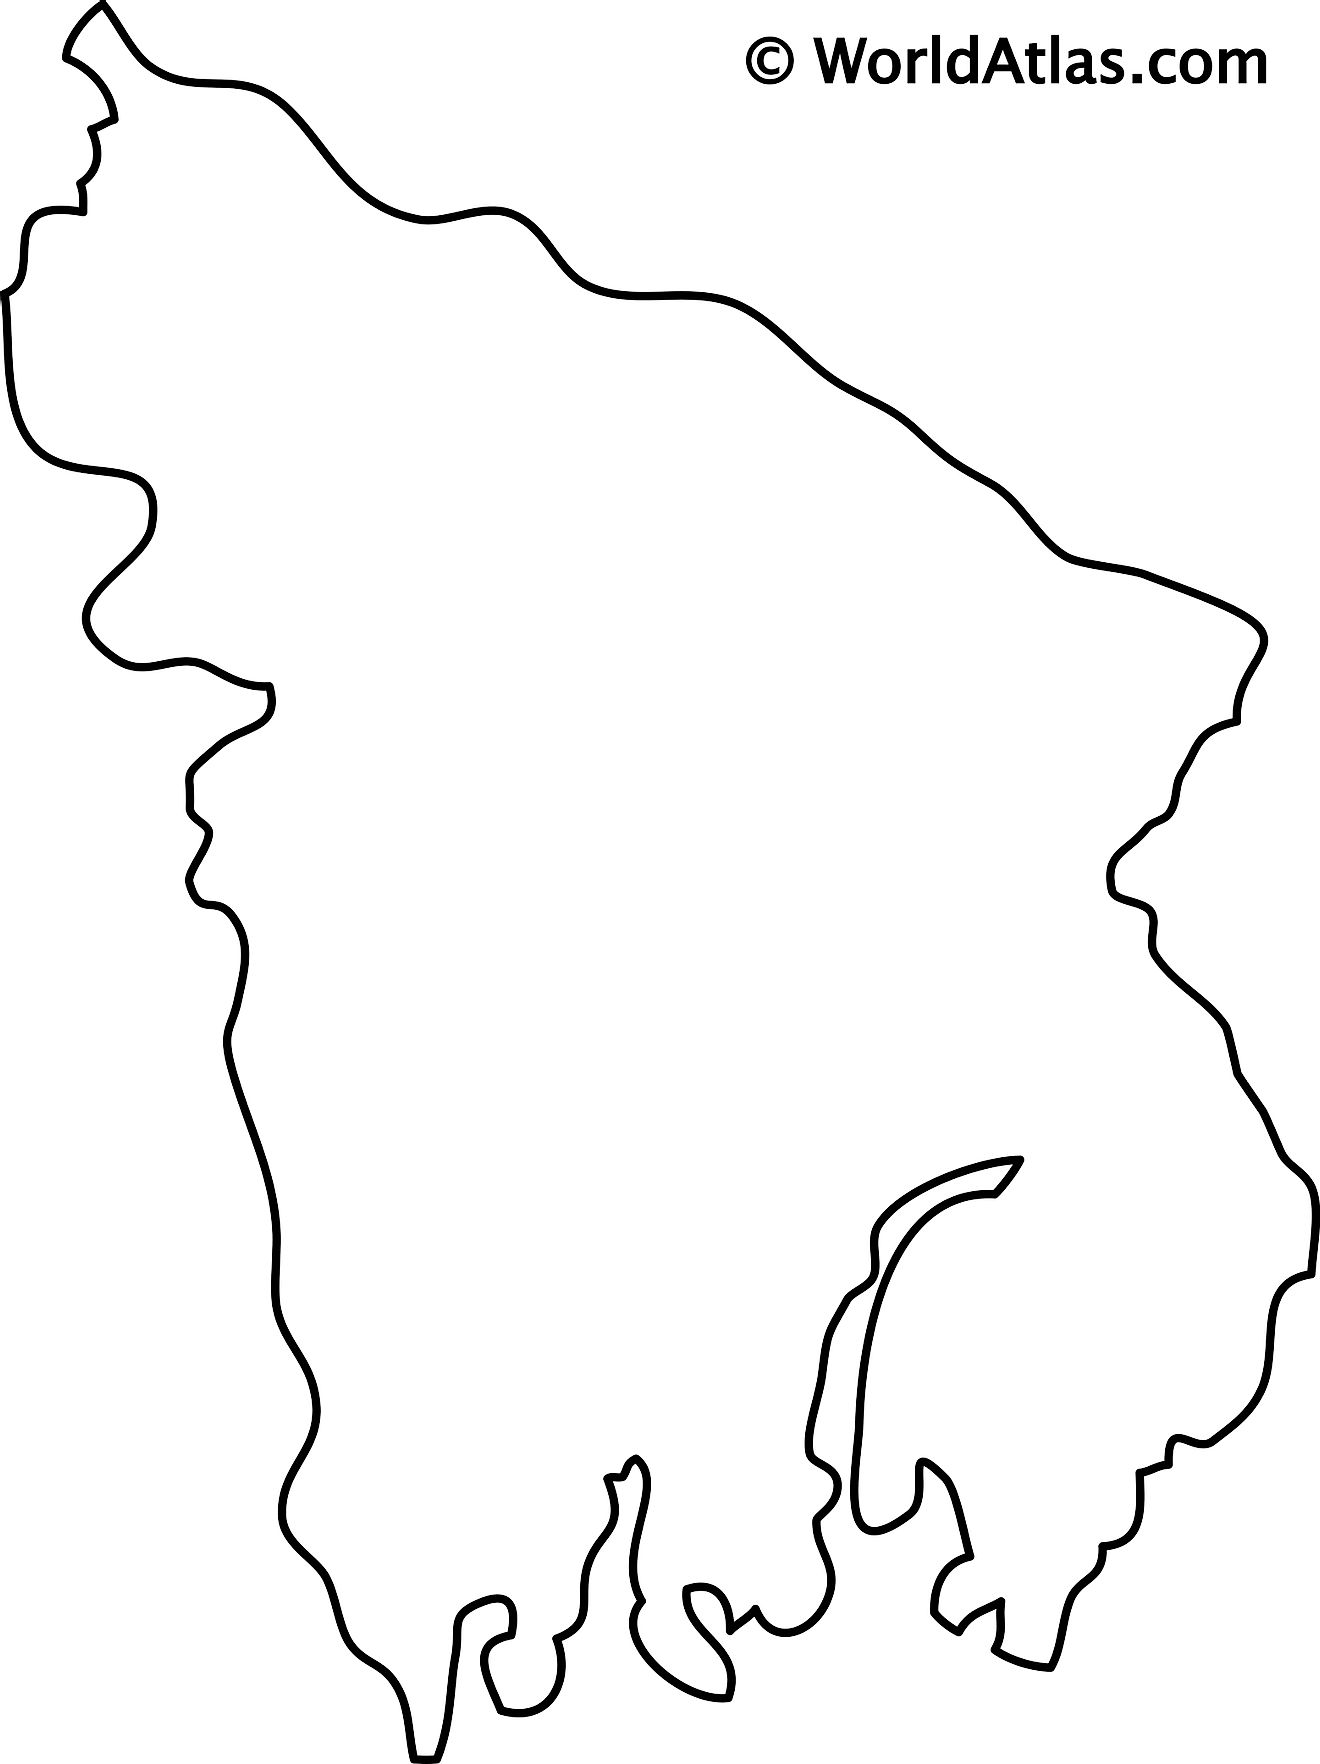 Blank Outline Map of Bangladesh